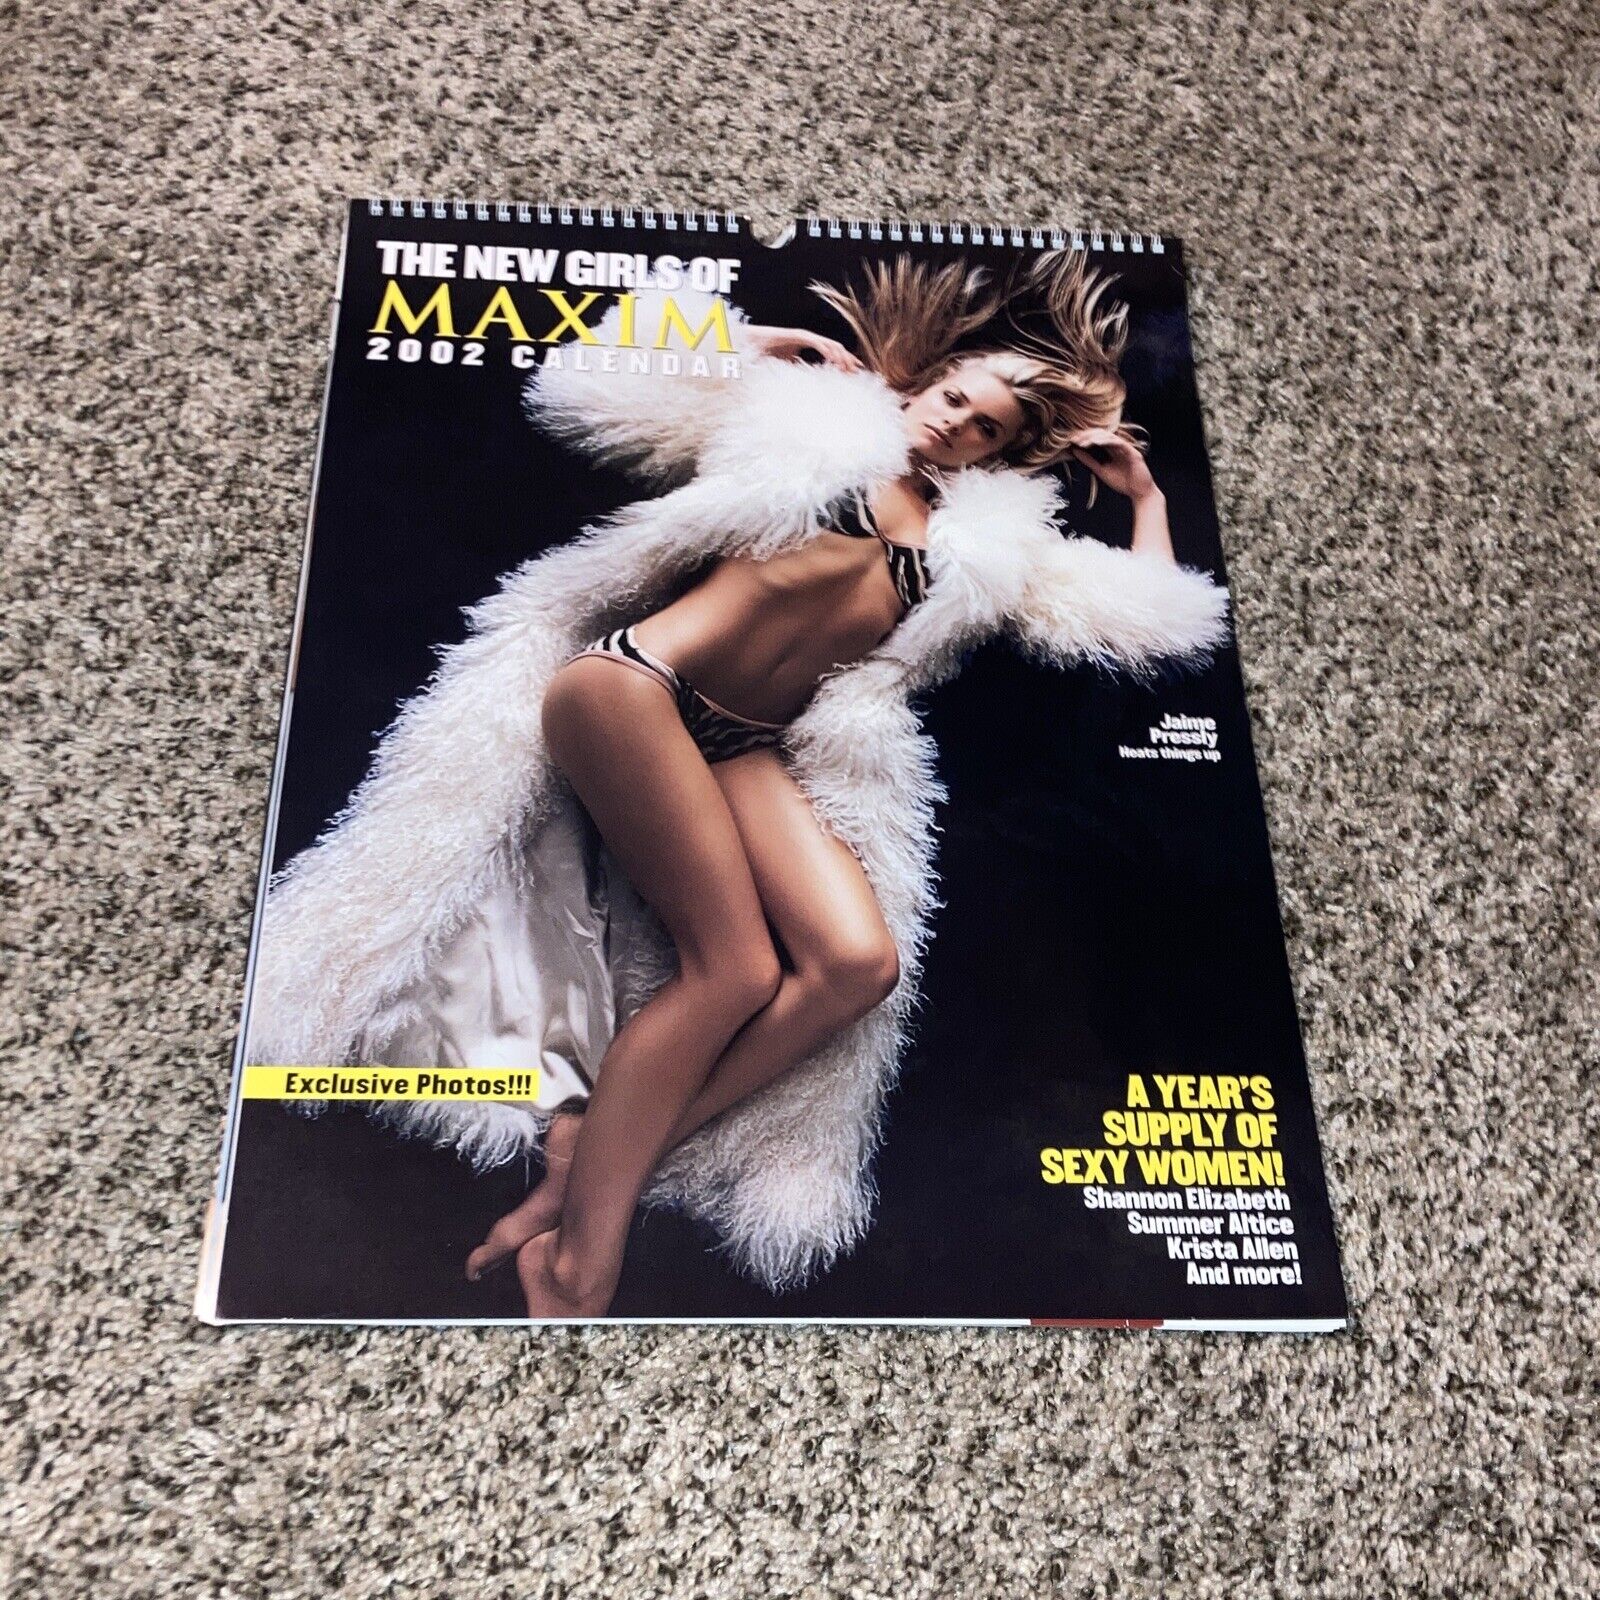 The New Girls of Maxim 2002 Calendar-  Jaime Pressly Vergara 18x14